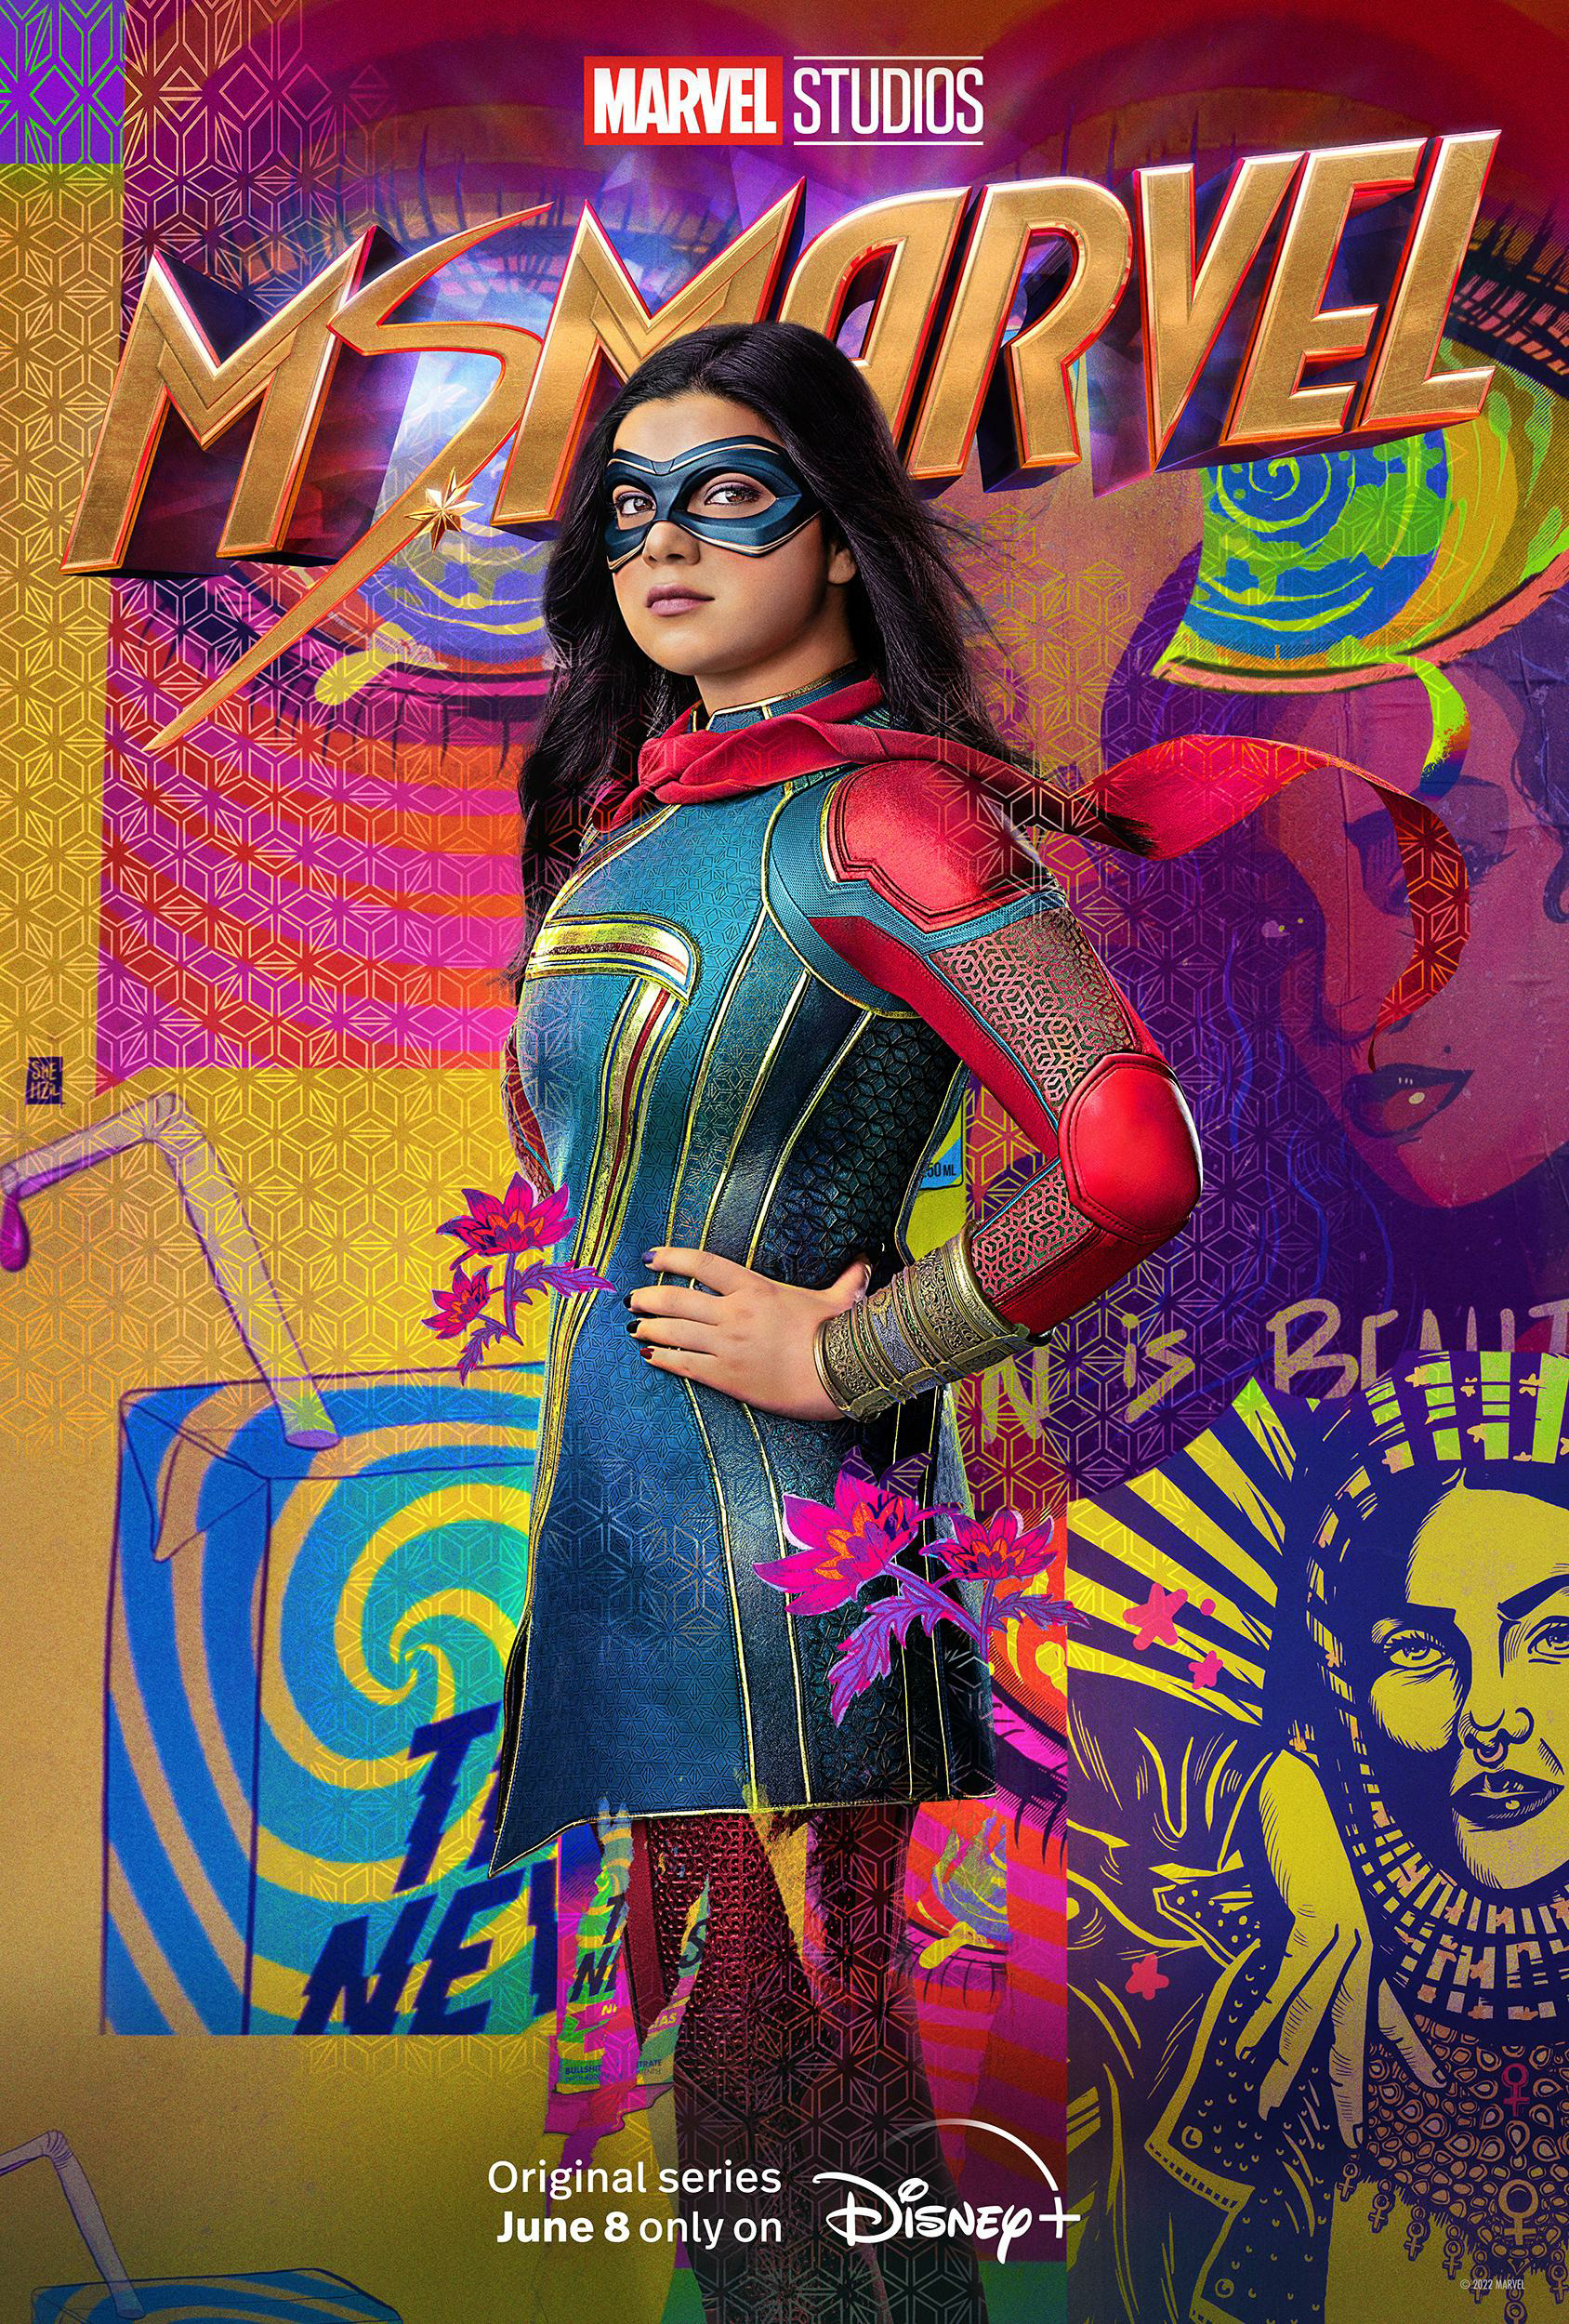 Mega Sized TV Poster Image for Ms. Marvel (#4 of 12)